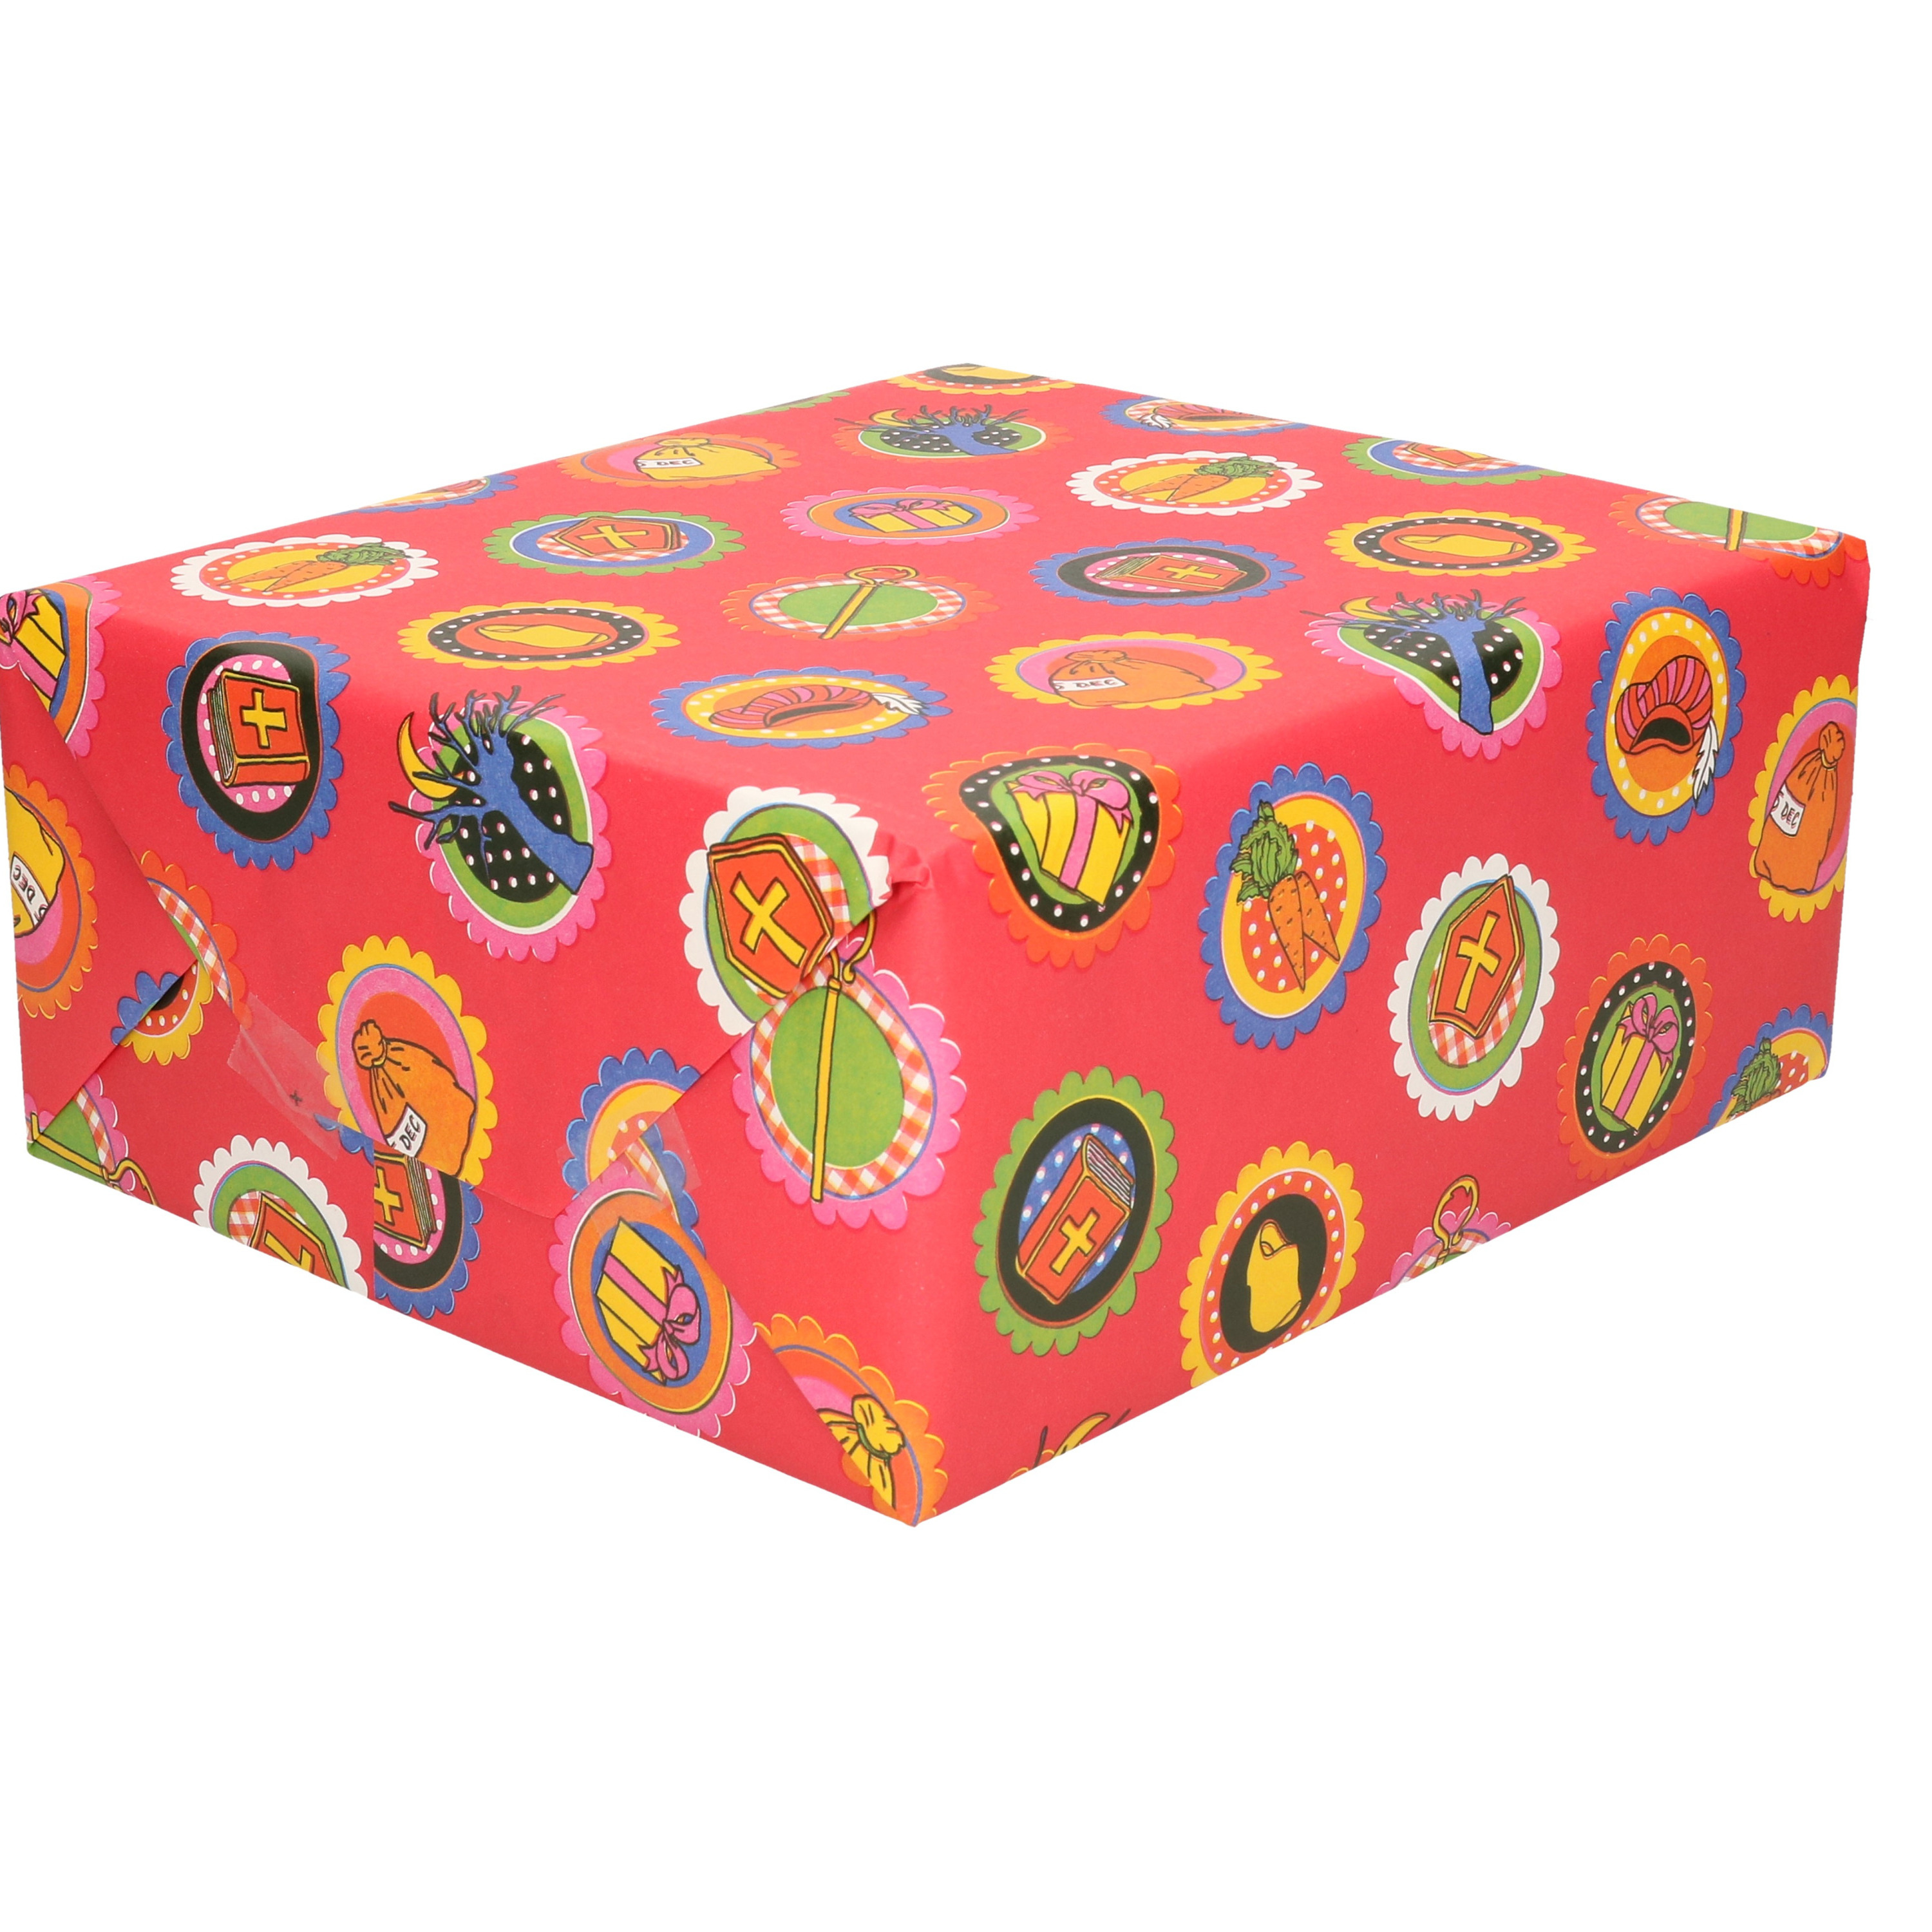 1x Rollen Sinterklaas inpakpapier/cadeaupapier rood 2,5 x 0,7 meter